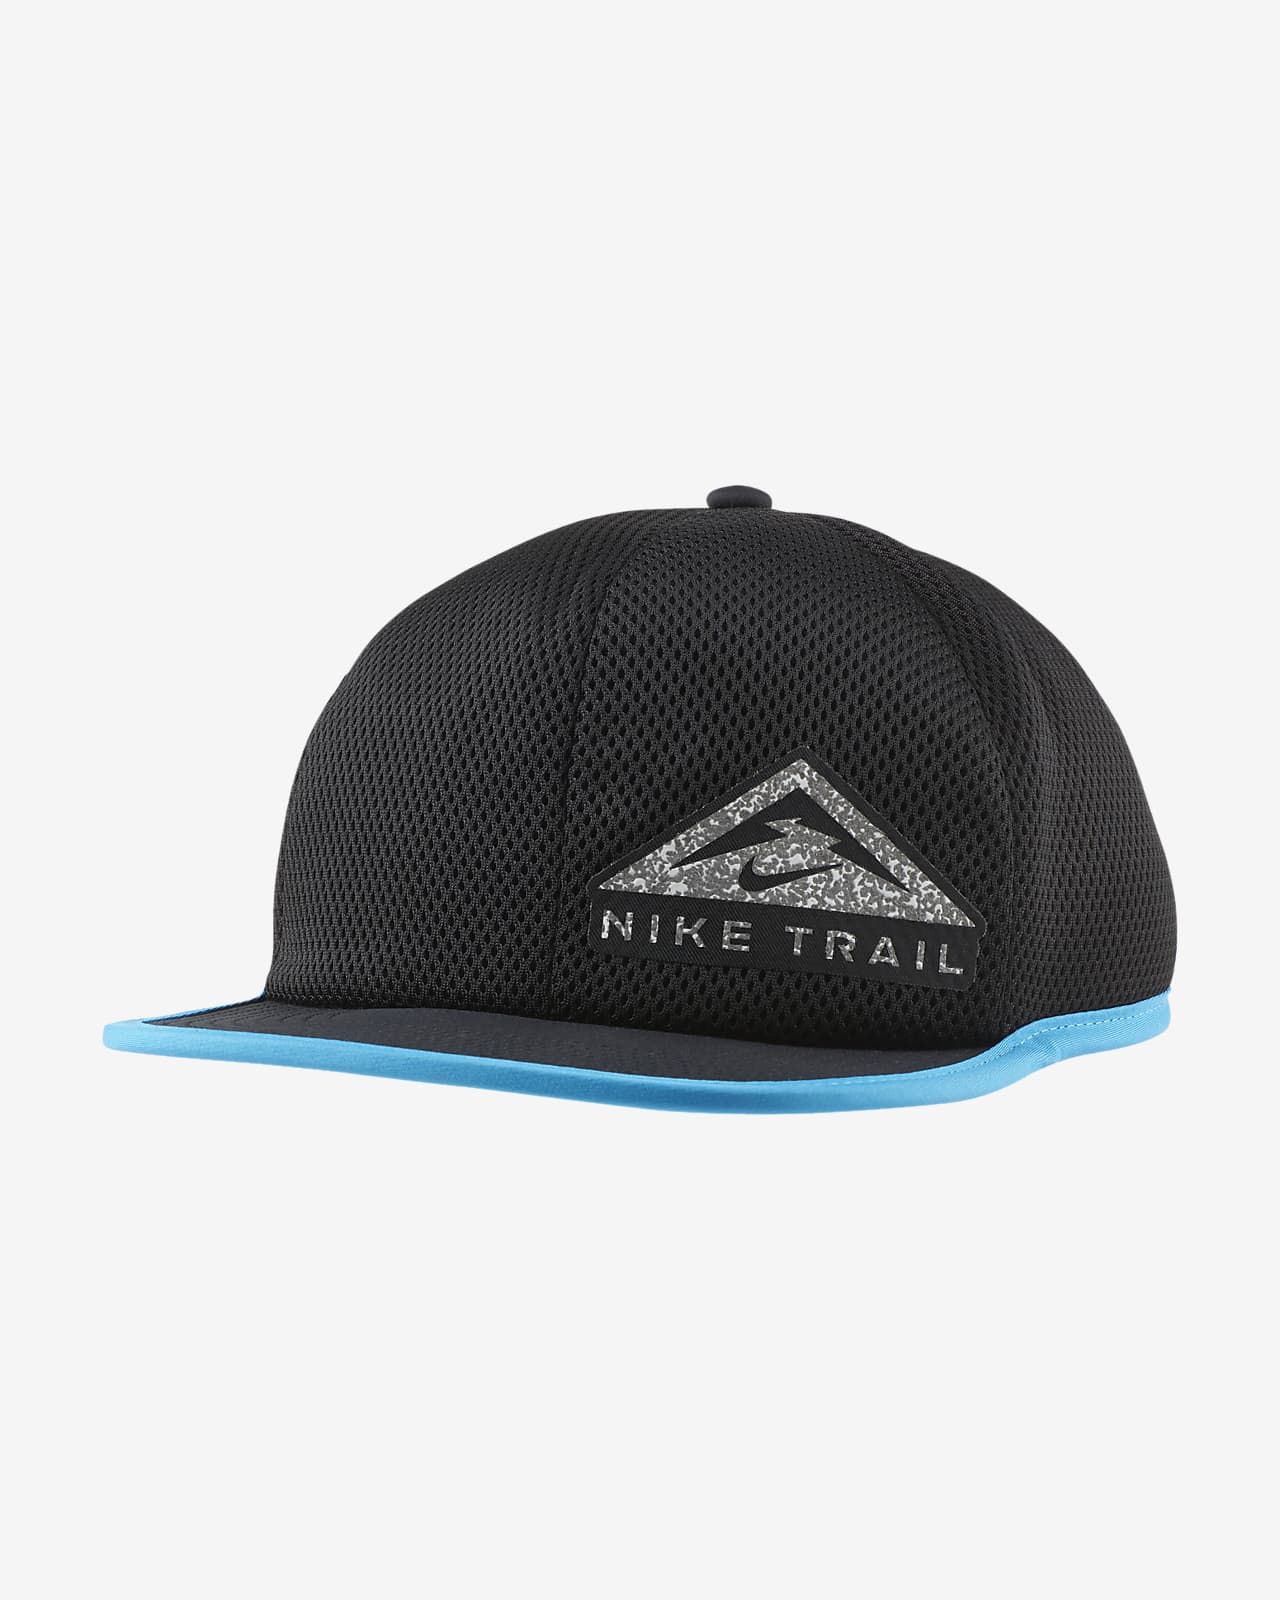 nike trail running hat